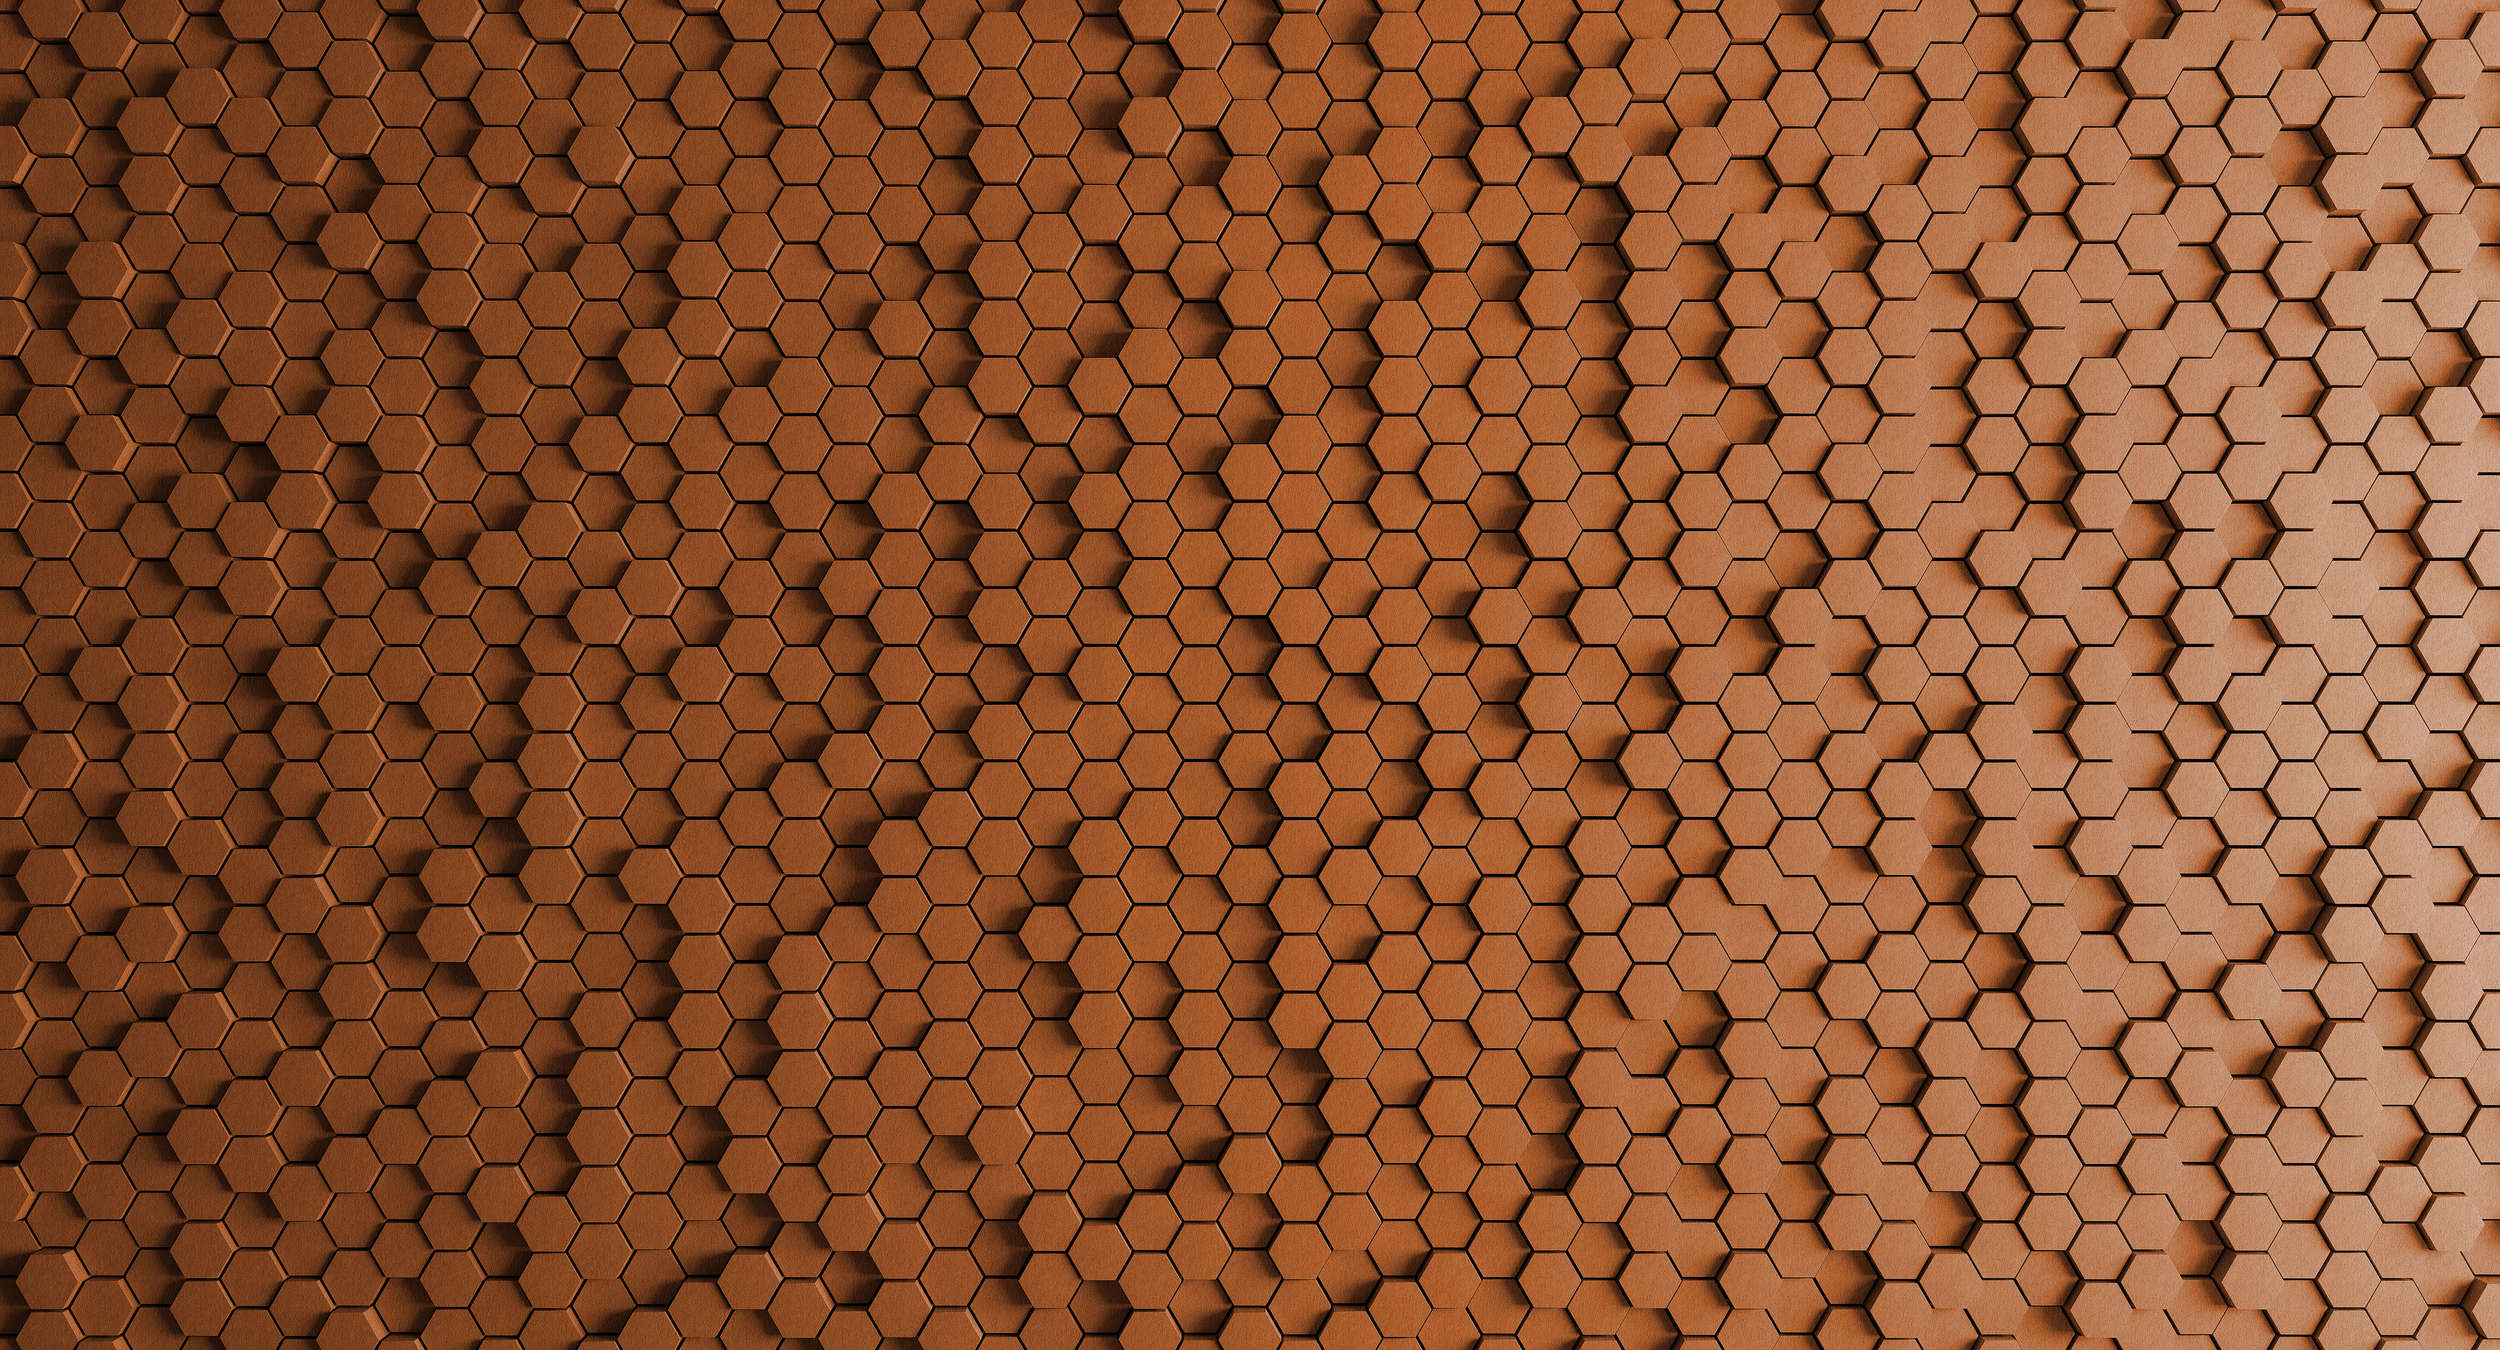             Honeycomb 2 - 3D Fototapete mit orangenem Wabendesign - Struktur Filz – Kupfer, Orange | Premium Glattvlies
        